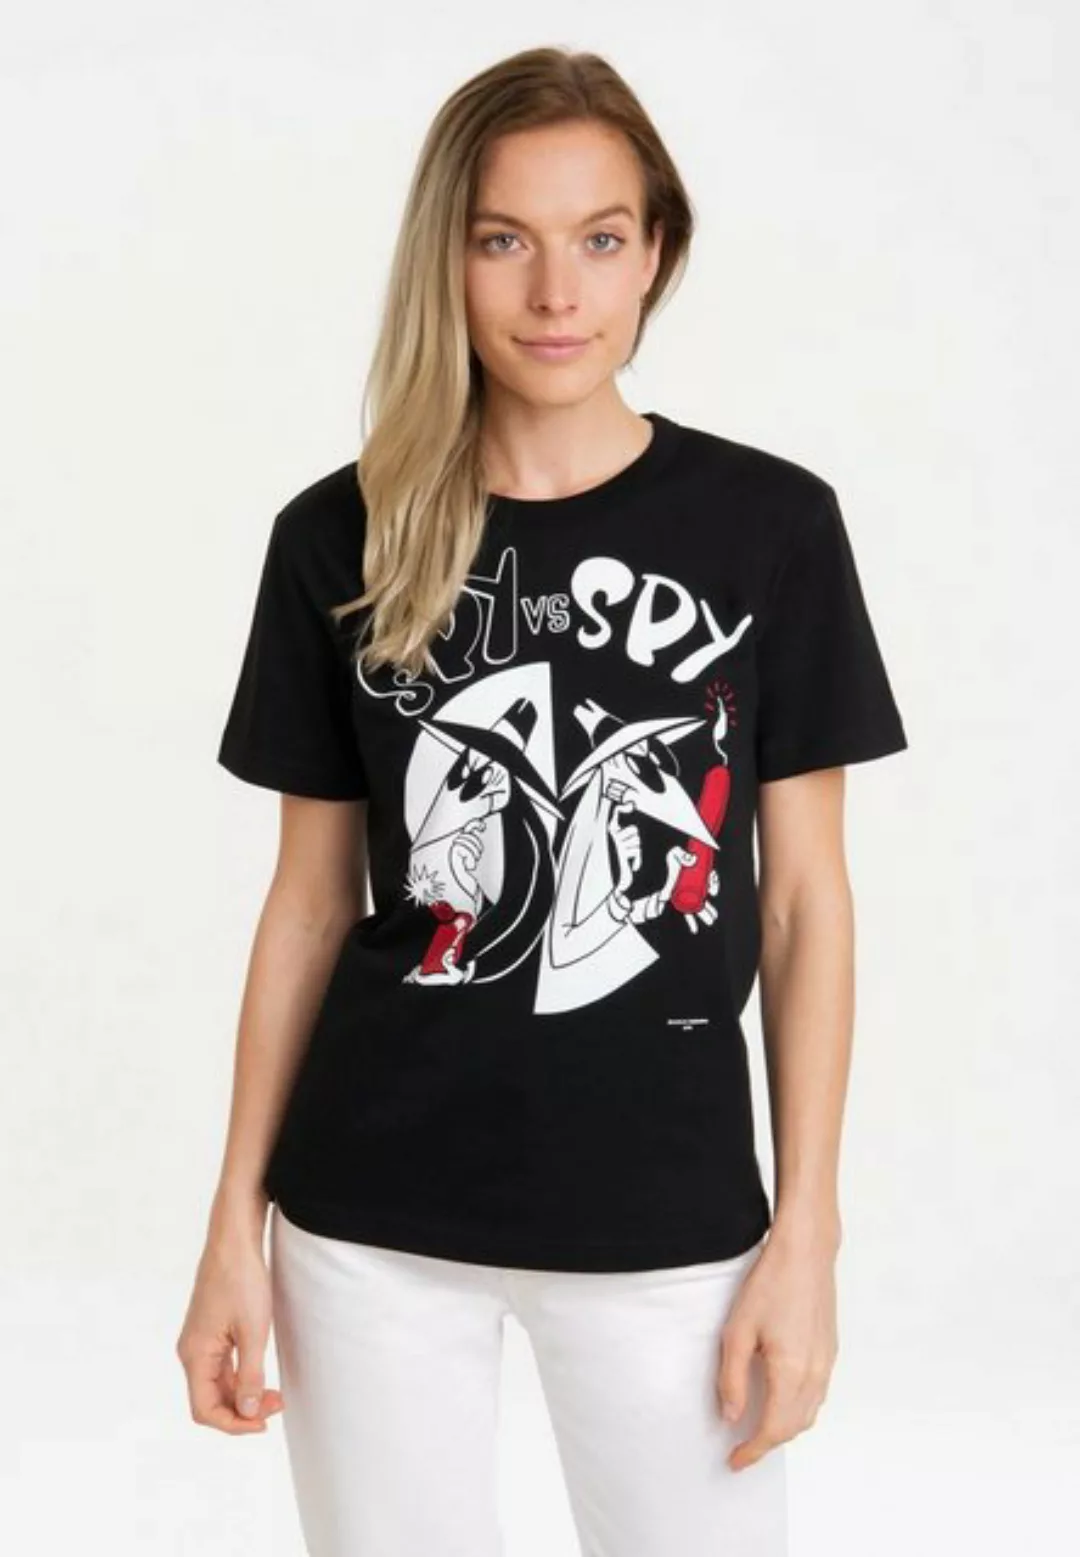 LOGOSHIRT T-Shirt Mad - Spy vs. Spy mit lizenziertem Print günstig online kaufen